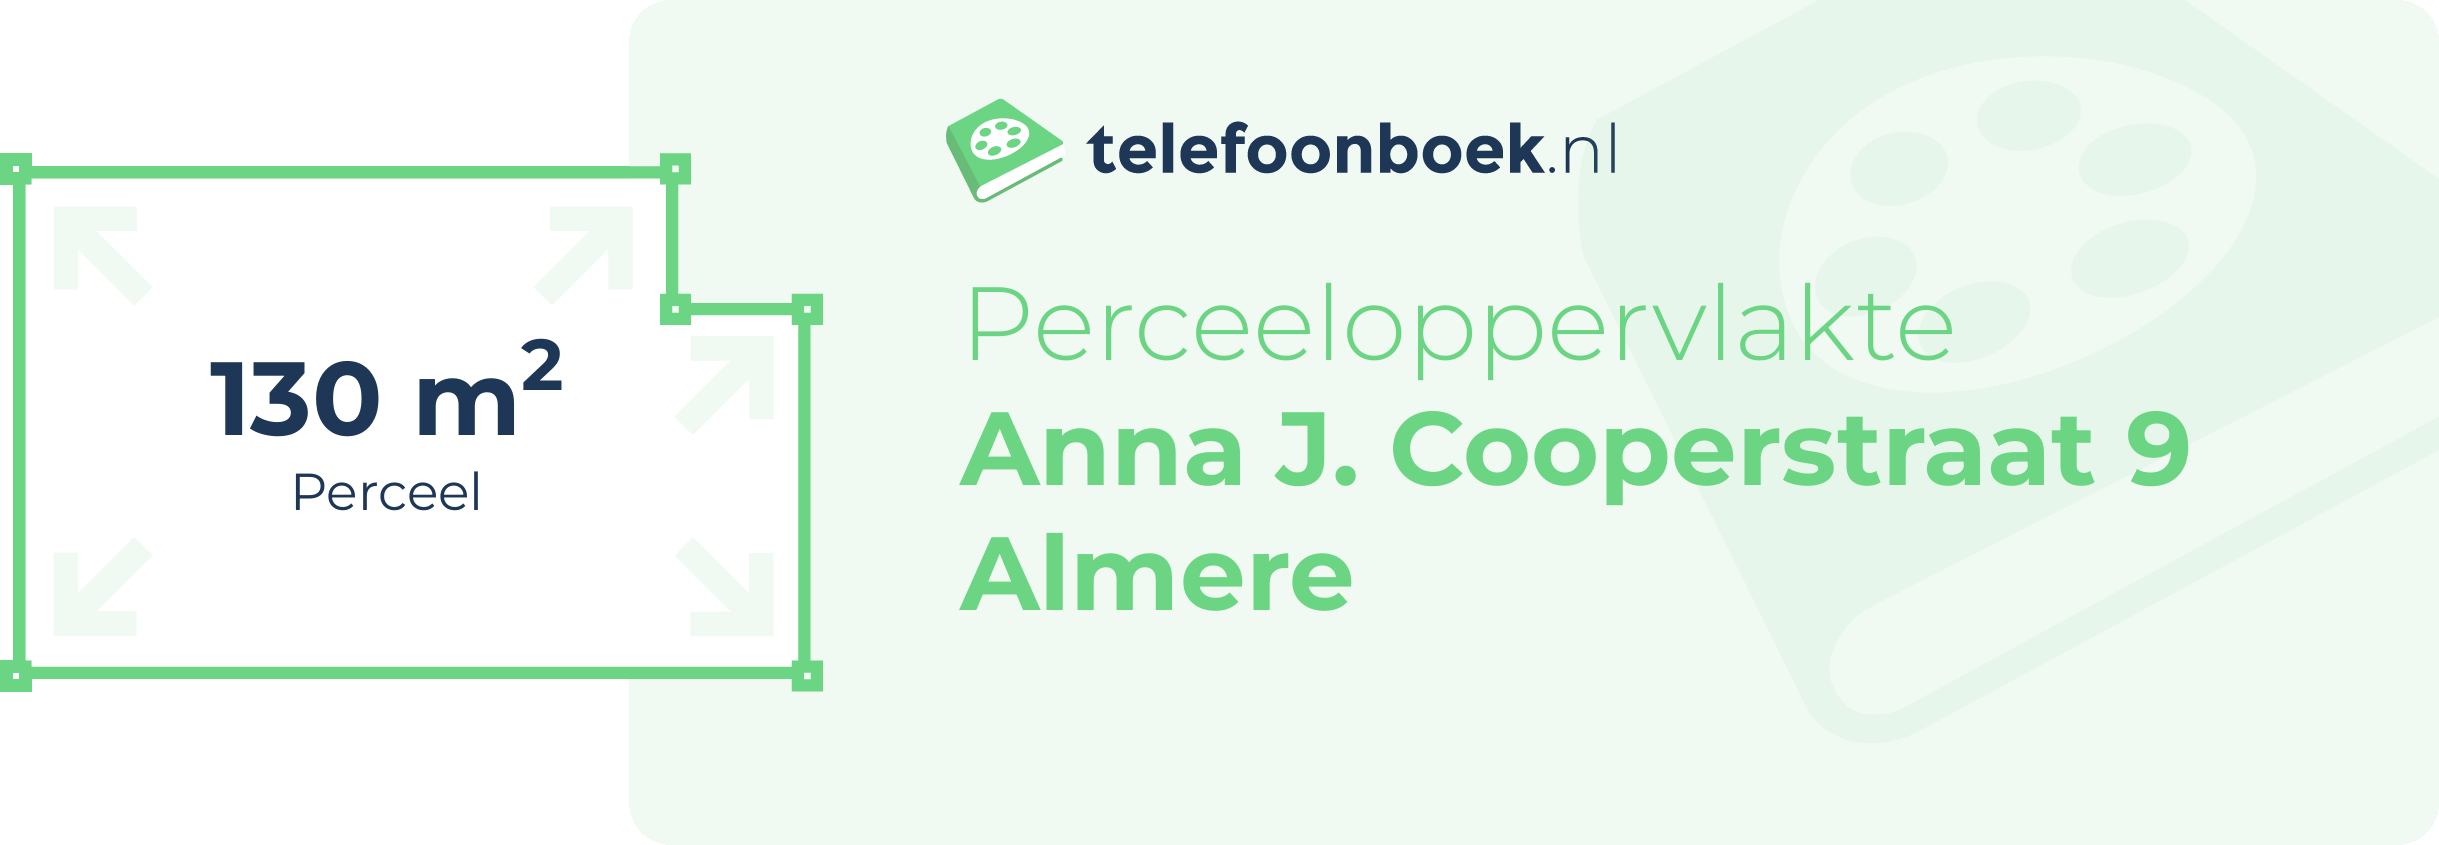 Perceeloppervlakte Anna J. Cooperstraat 9 Almere